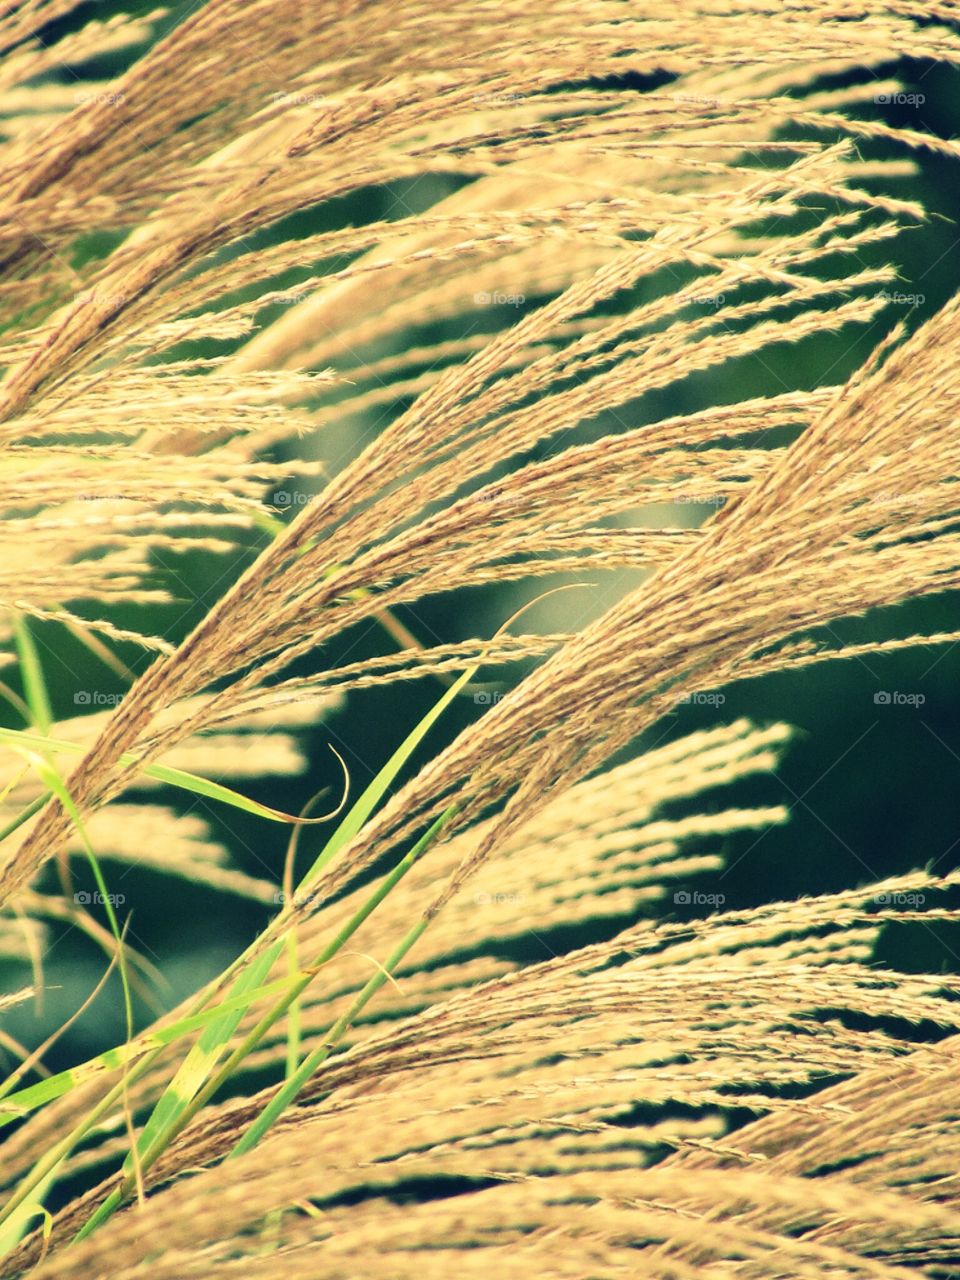 Close-up of crop